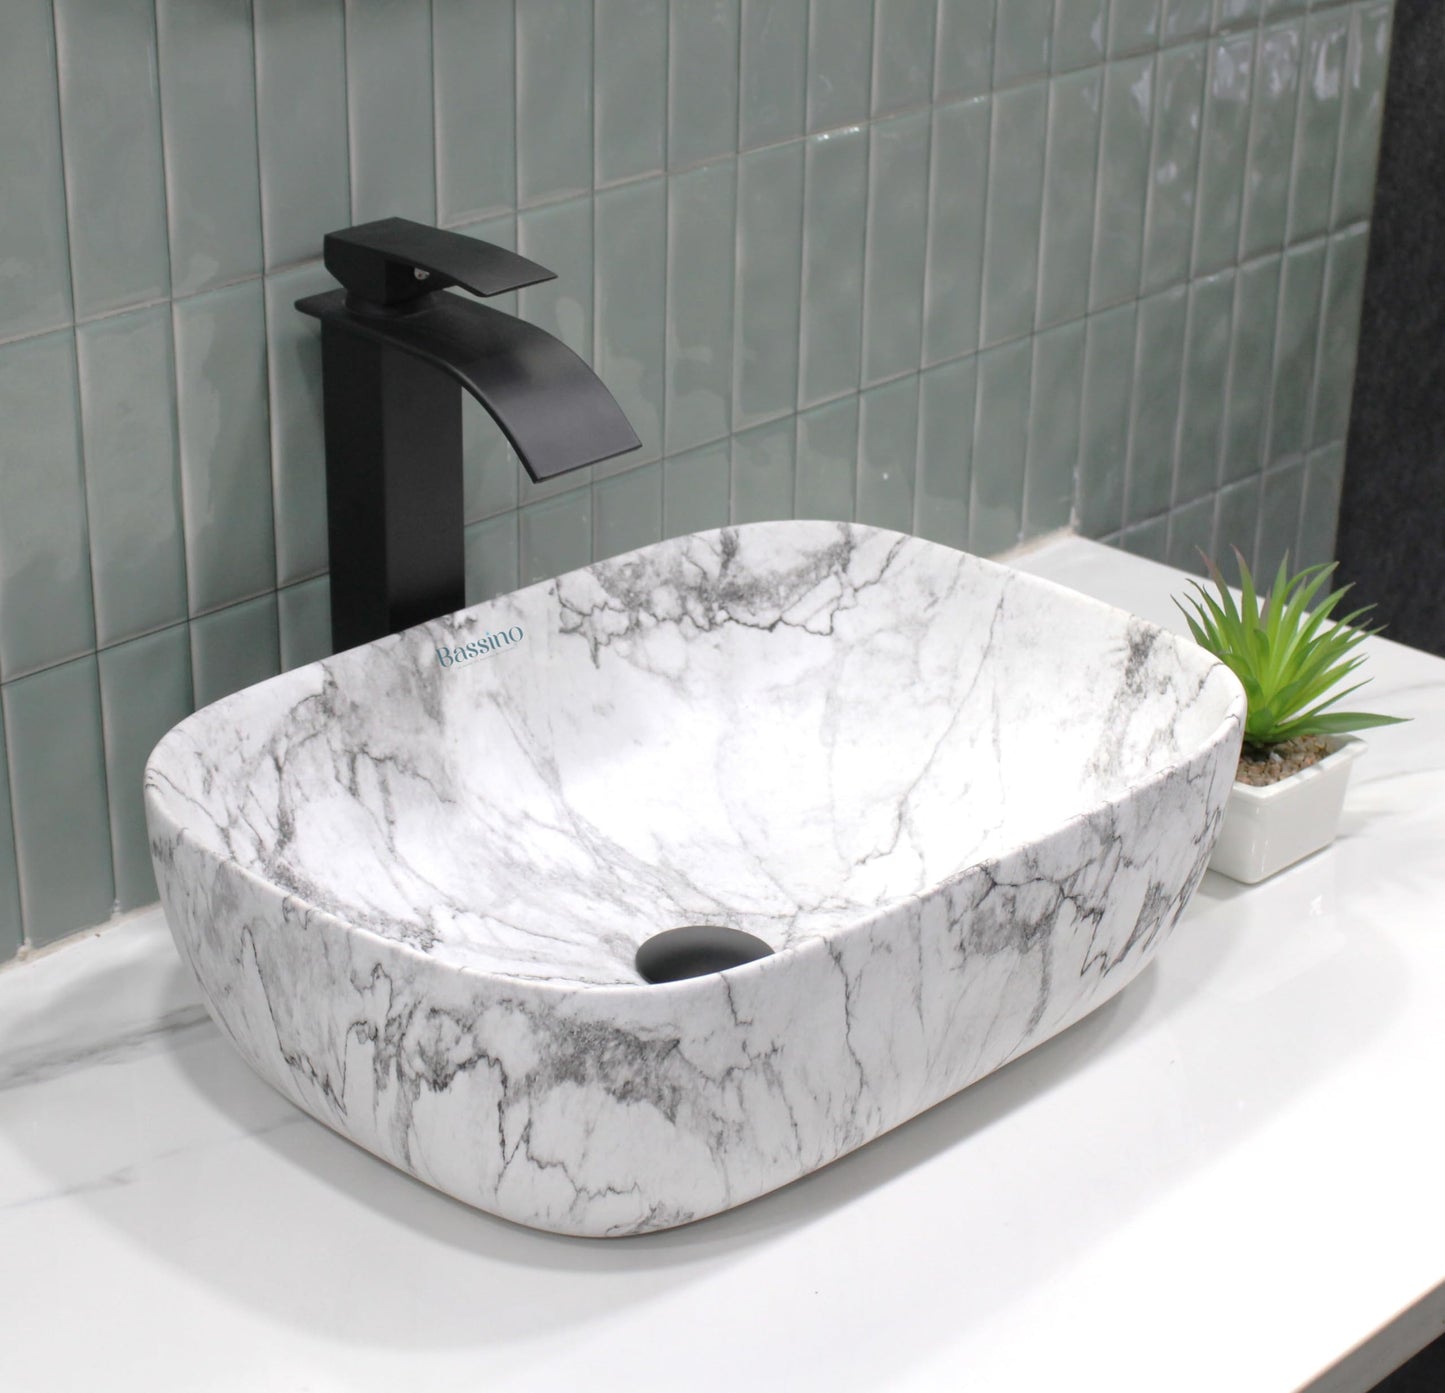 BASSINO Design Wash Basin Ceramic Tabletop Marble Bathroom Sink/Countertop Vessel Sink for Bathroom & Living Room - 455 x 325 x 145 mm (White Marble)